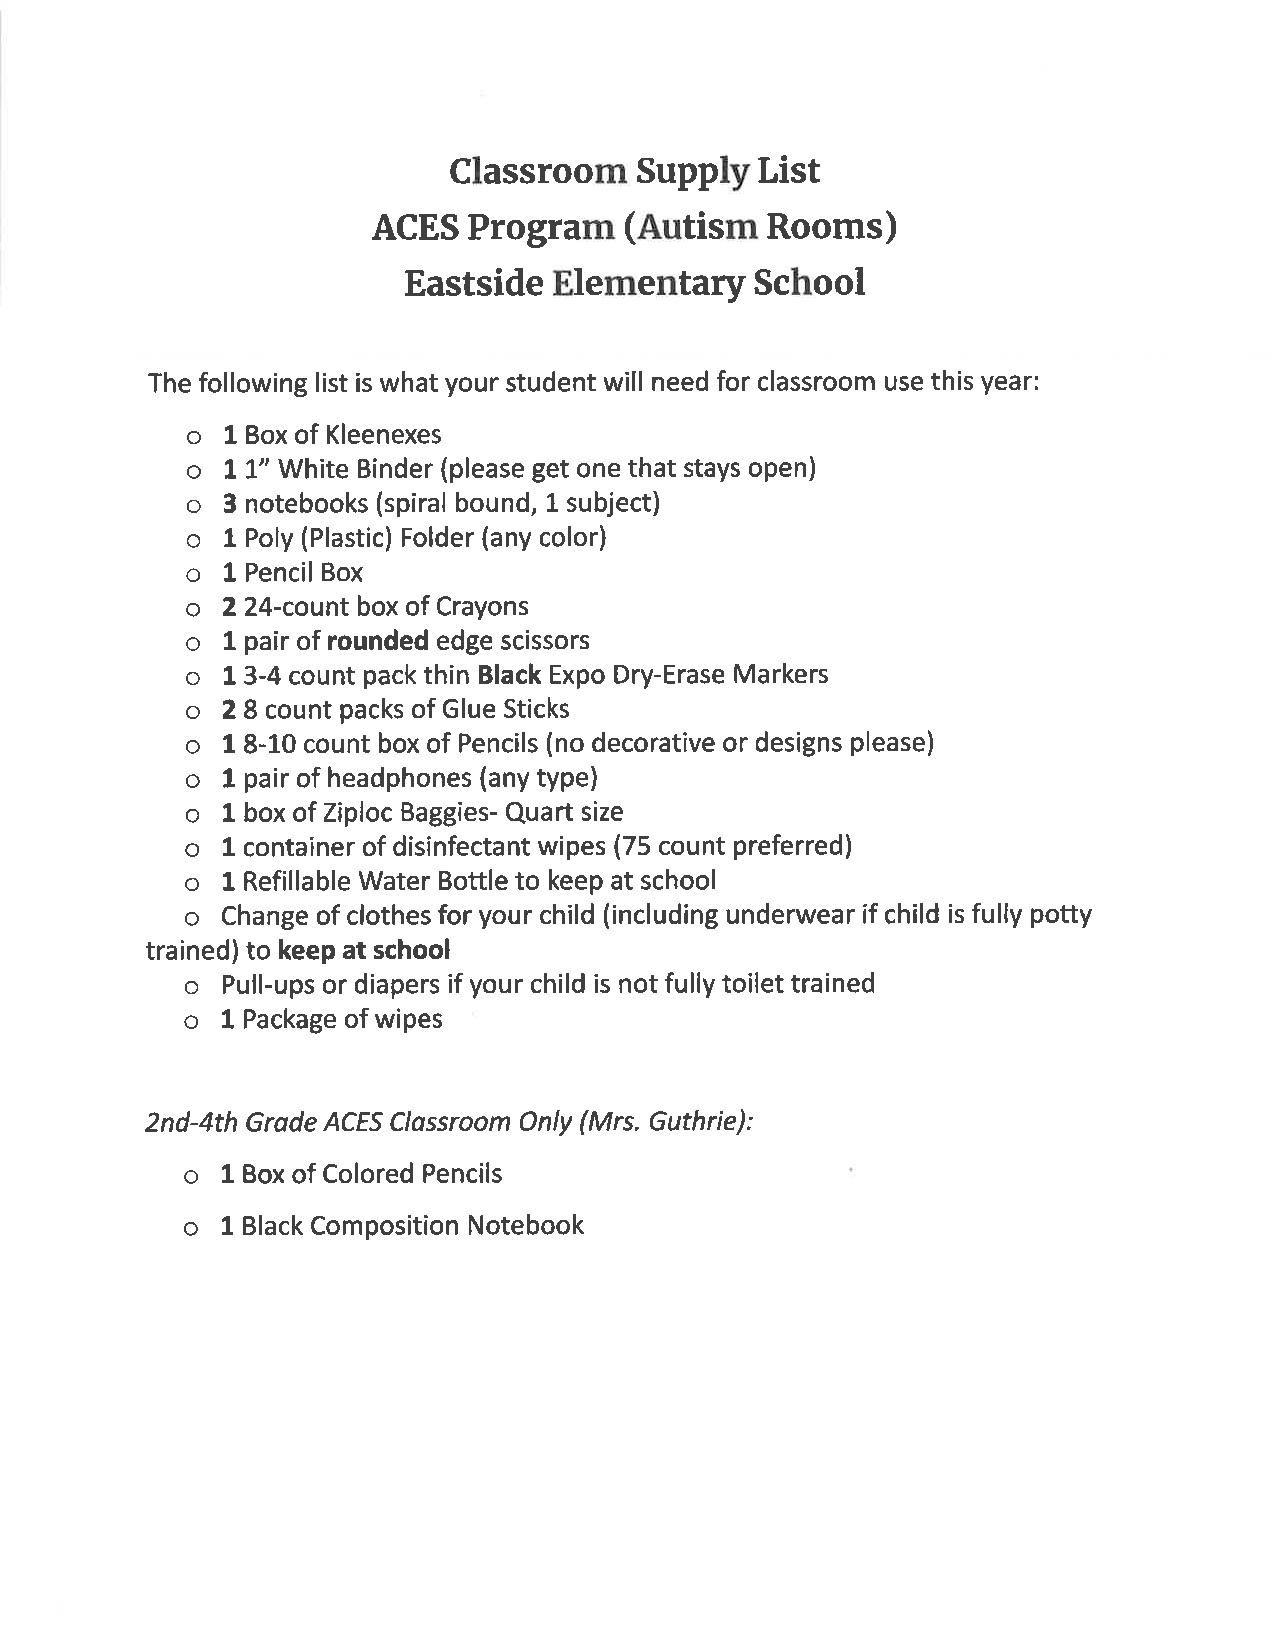 ACES Class Supply List